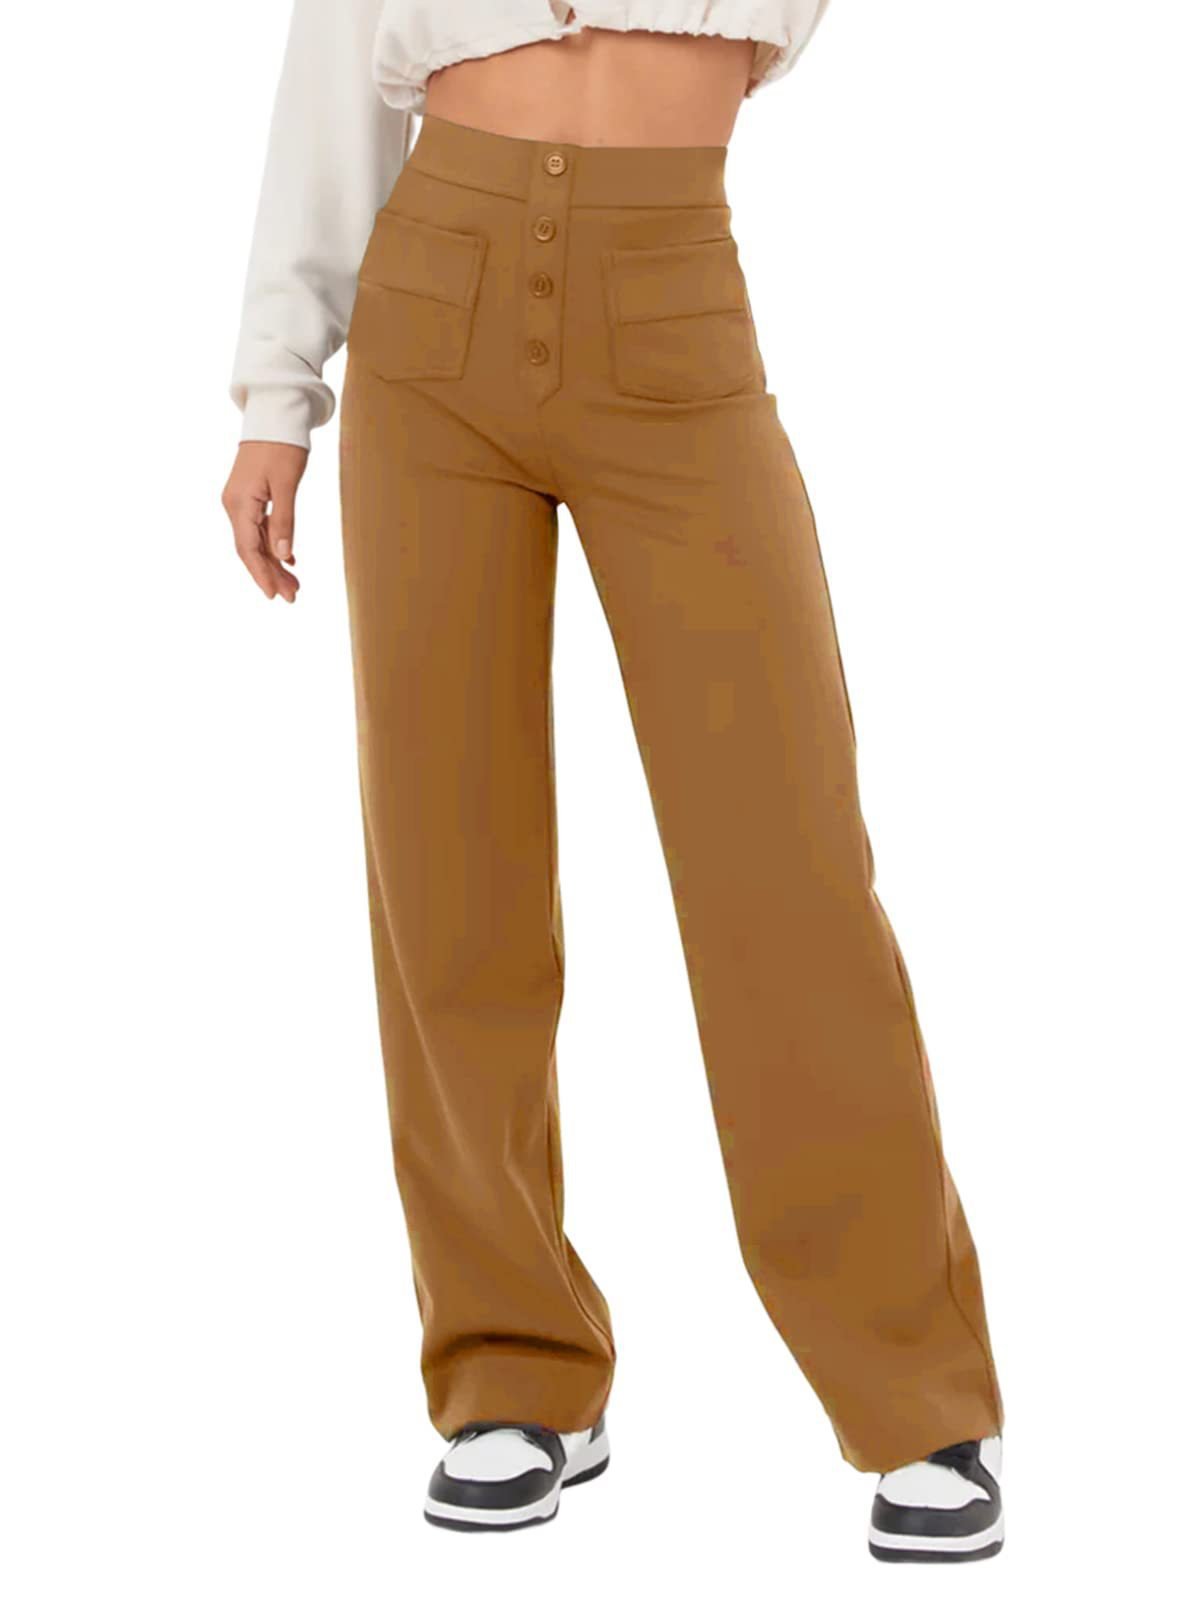 High-waisted elastic casual pants